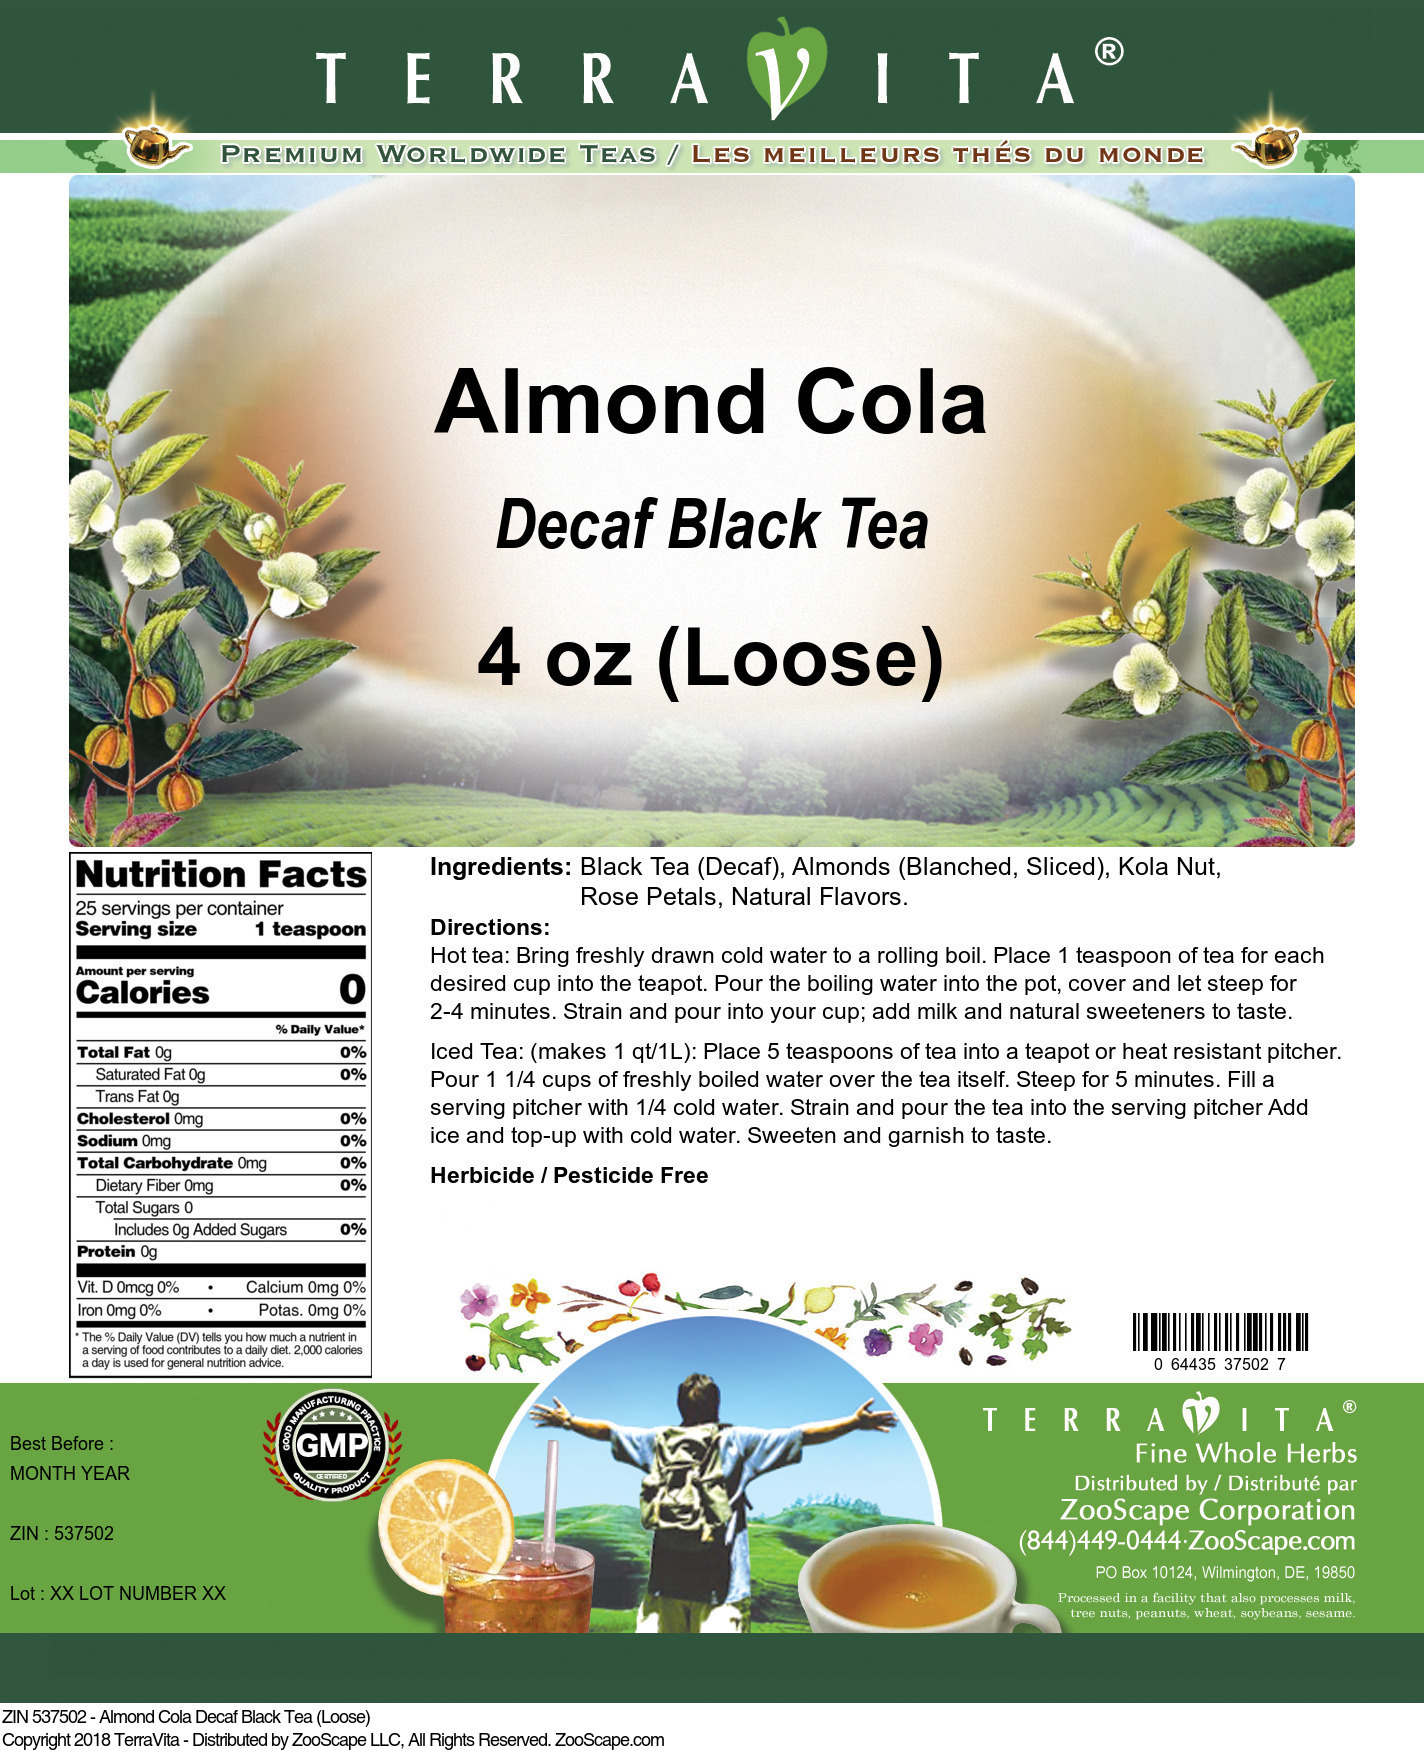 Almond Cola Decaf Black Tea (Loose) - Label